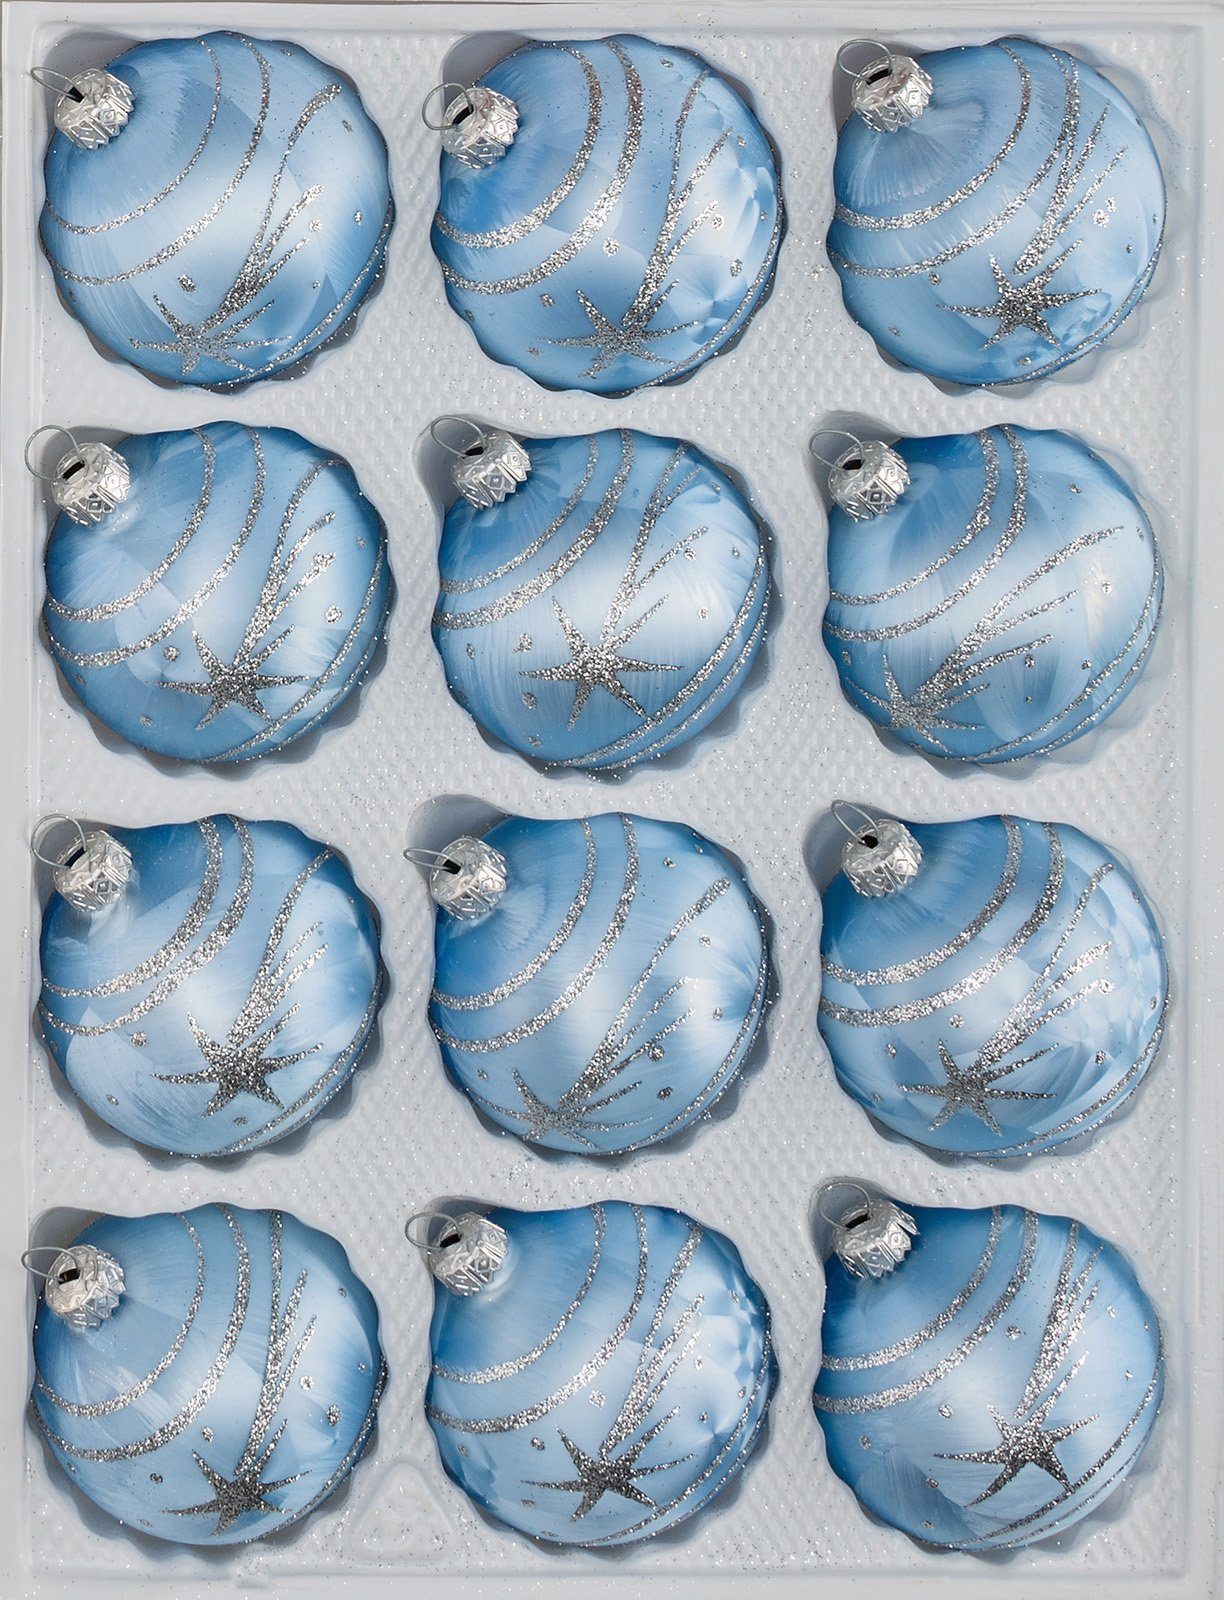 Navidacio Weihnachtsbaumkugel 12 tlg. Glas-Weihnachtskugeln in Set Ice Silber Komet Blau